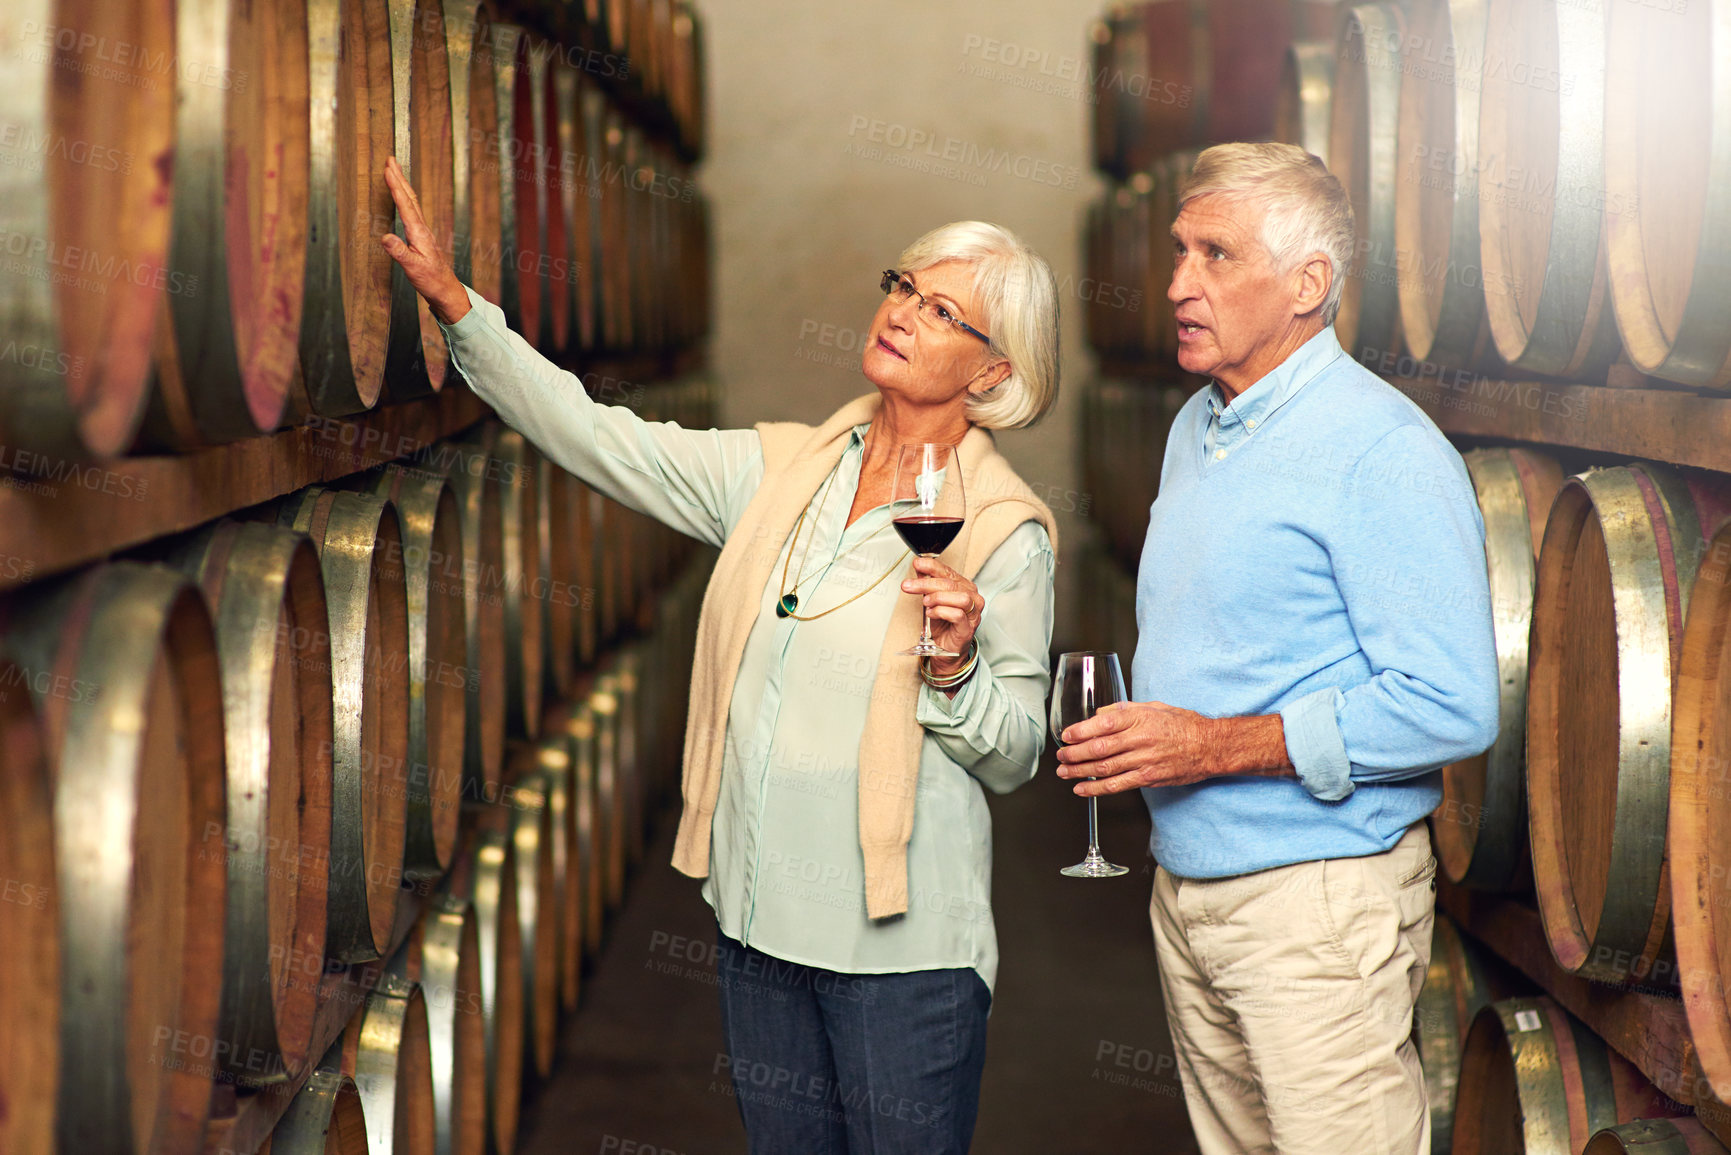 Buy stock photo Cropped shot of a senior couple enjoying a little wine tasting